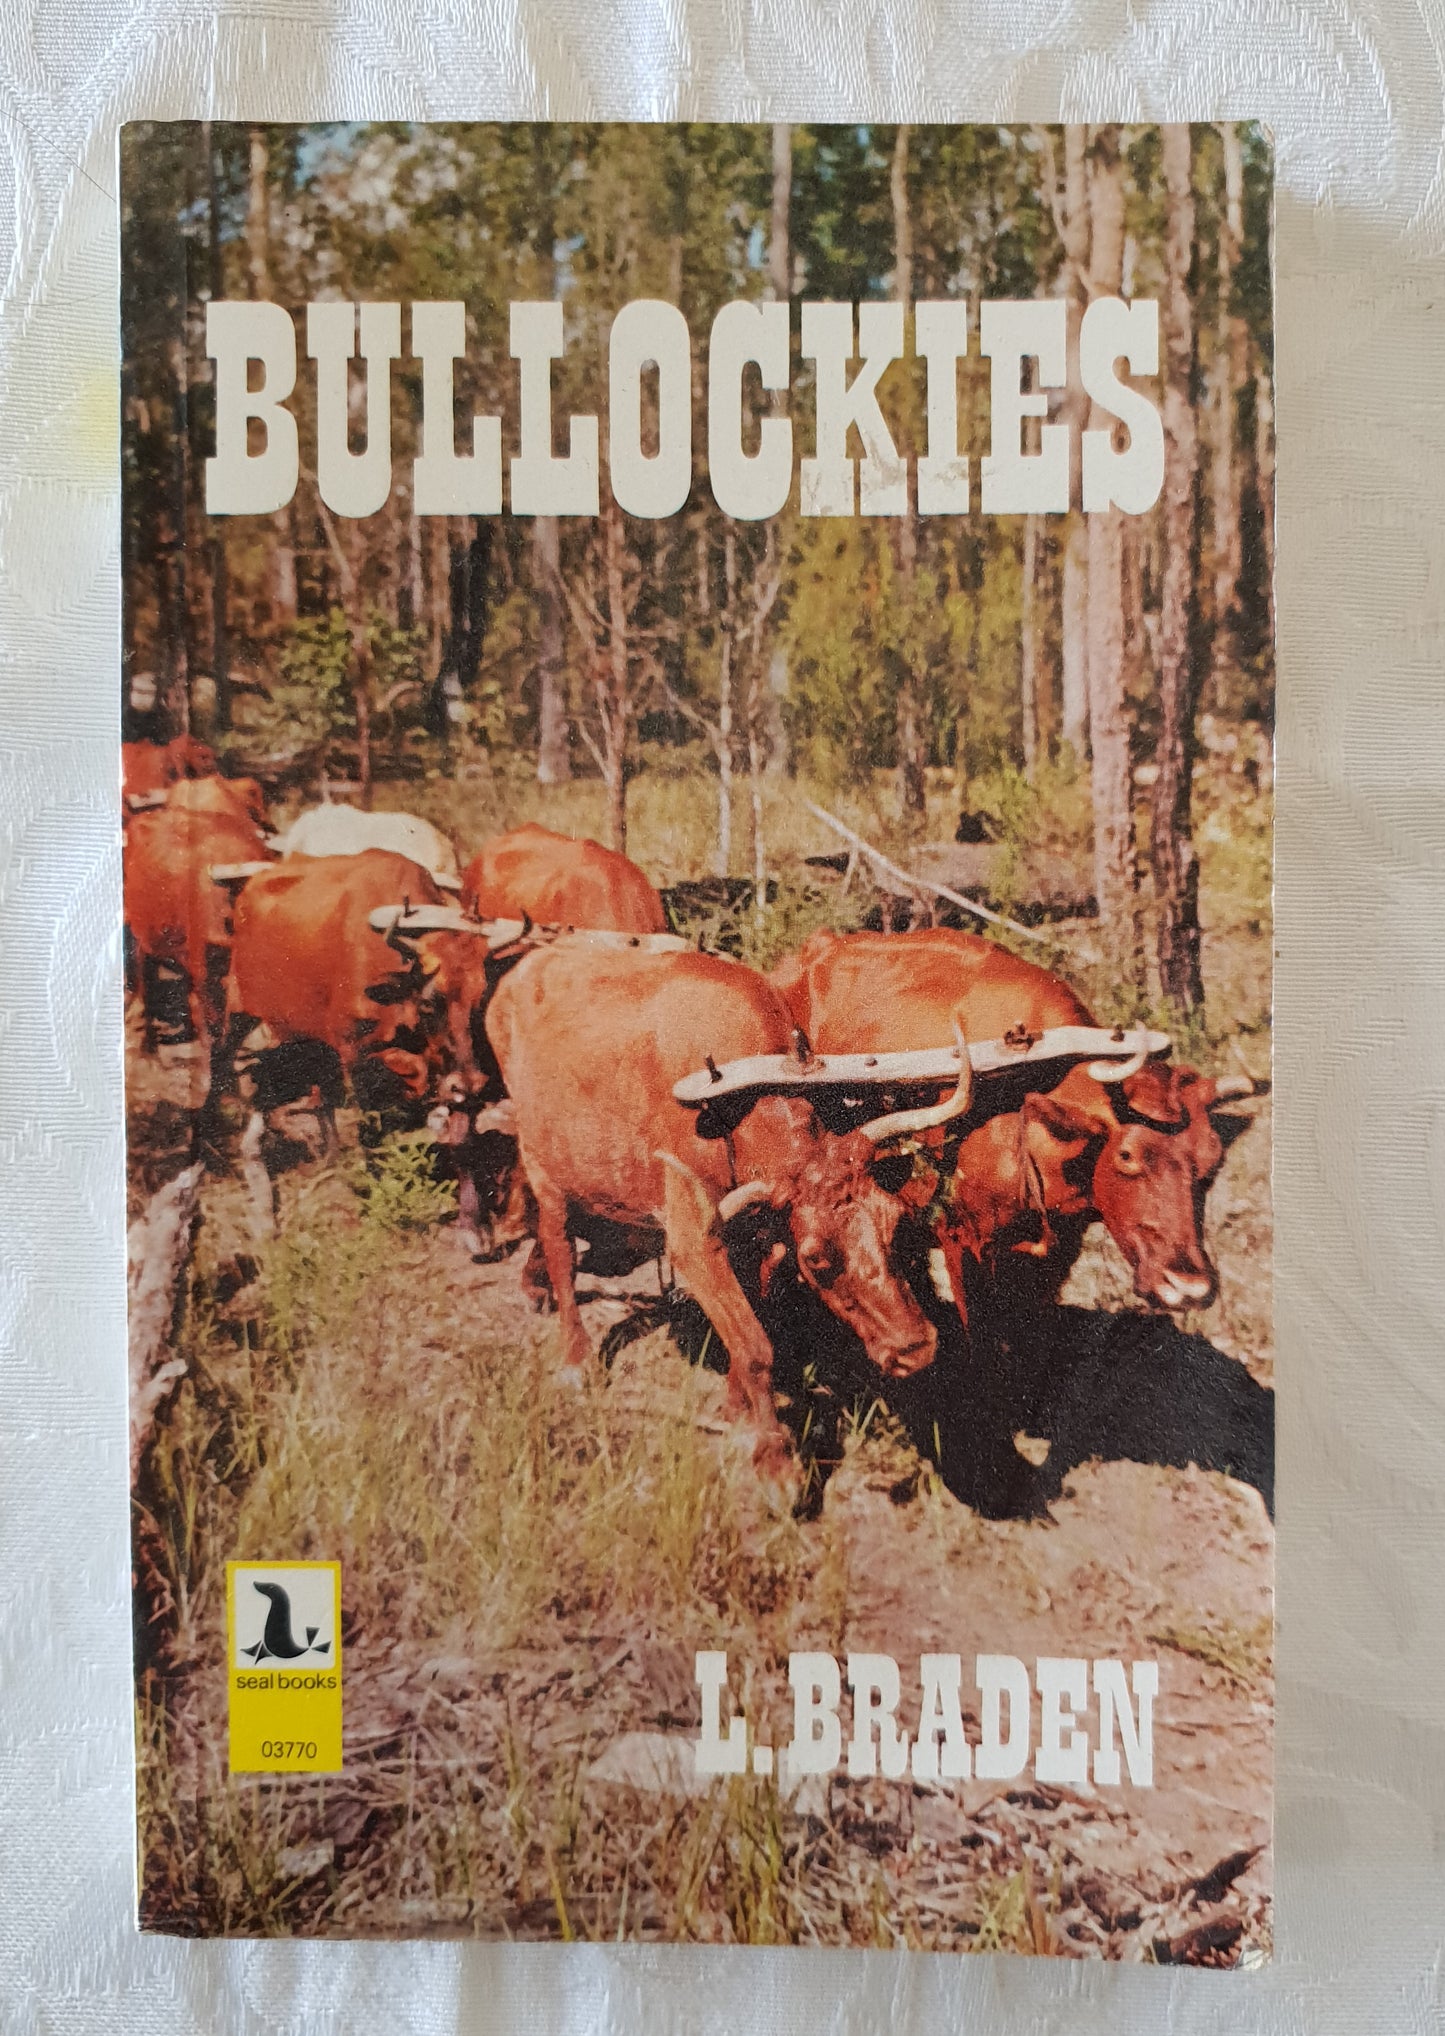 Bullockies by L. Braden